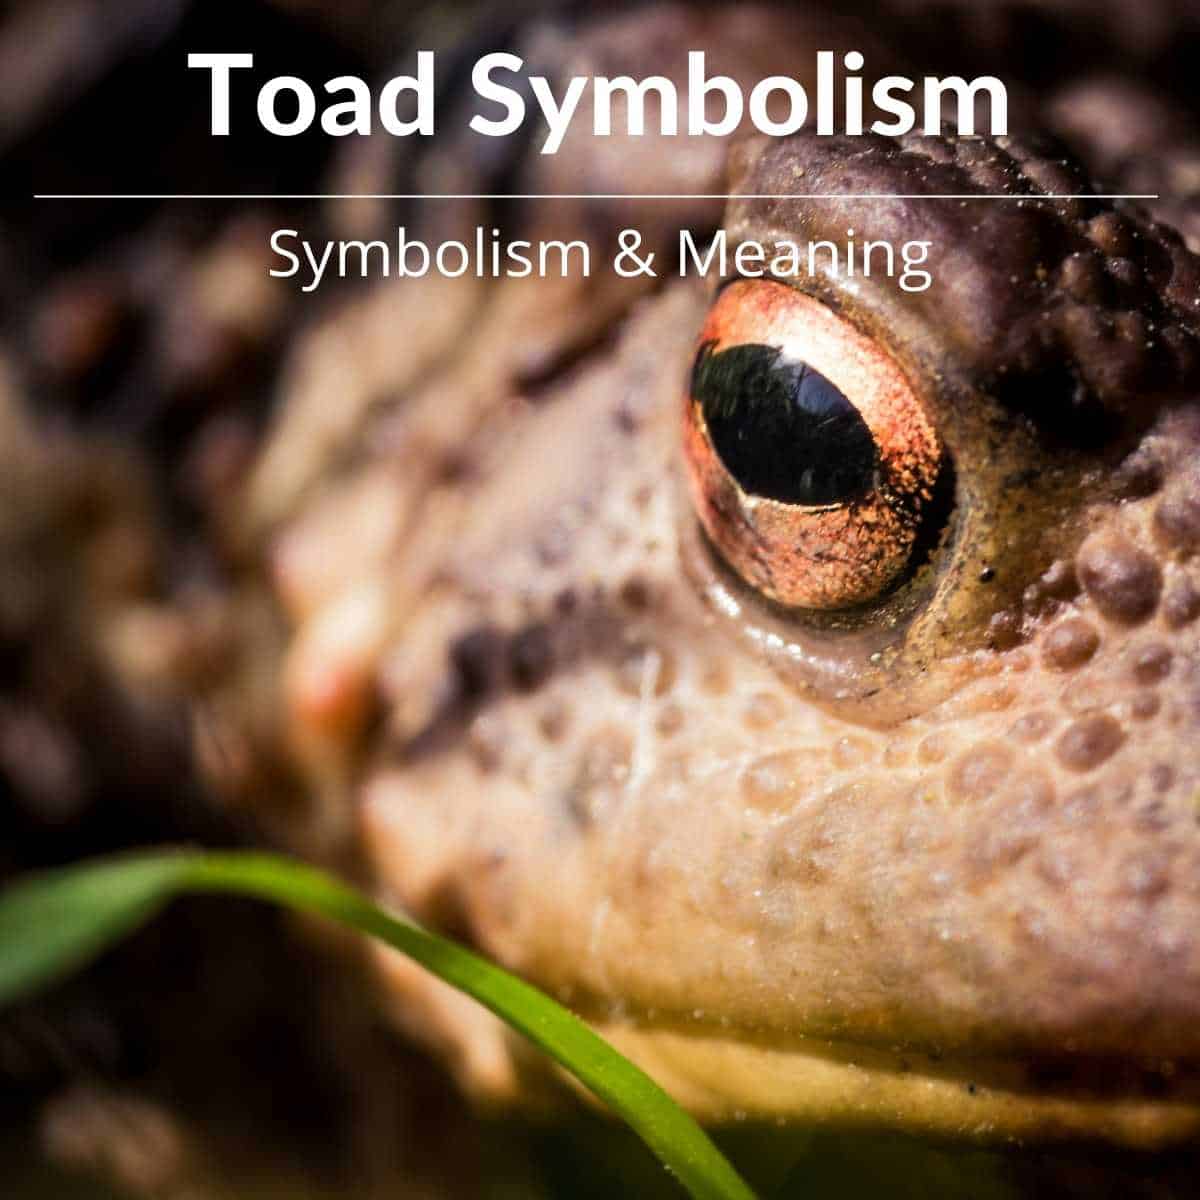 toad symbolism